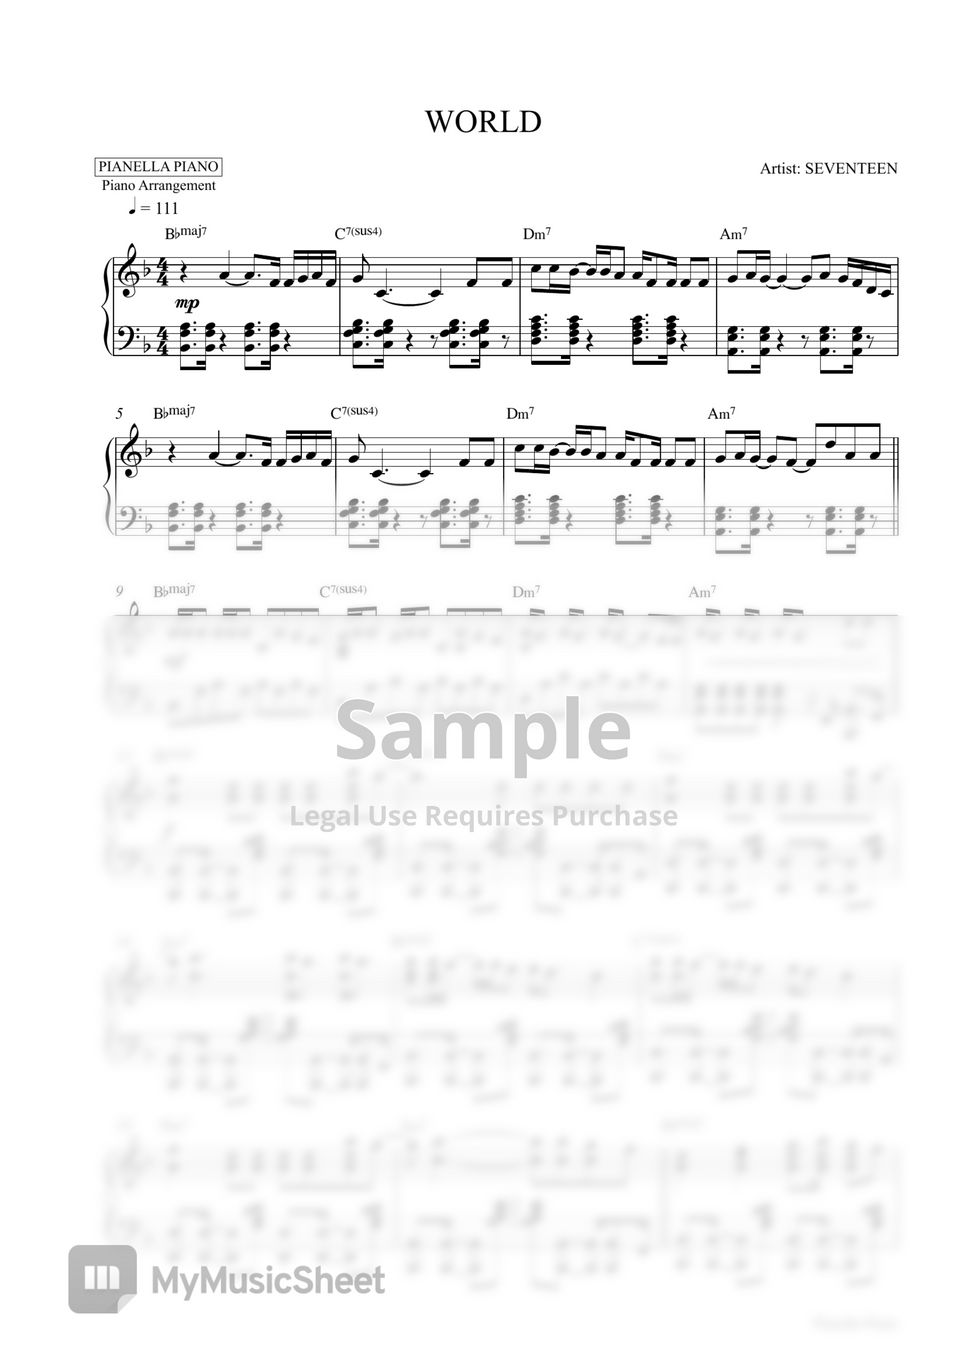 SEVENTEEN - _WORLD (Piano Sheet) by Pianella Piano